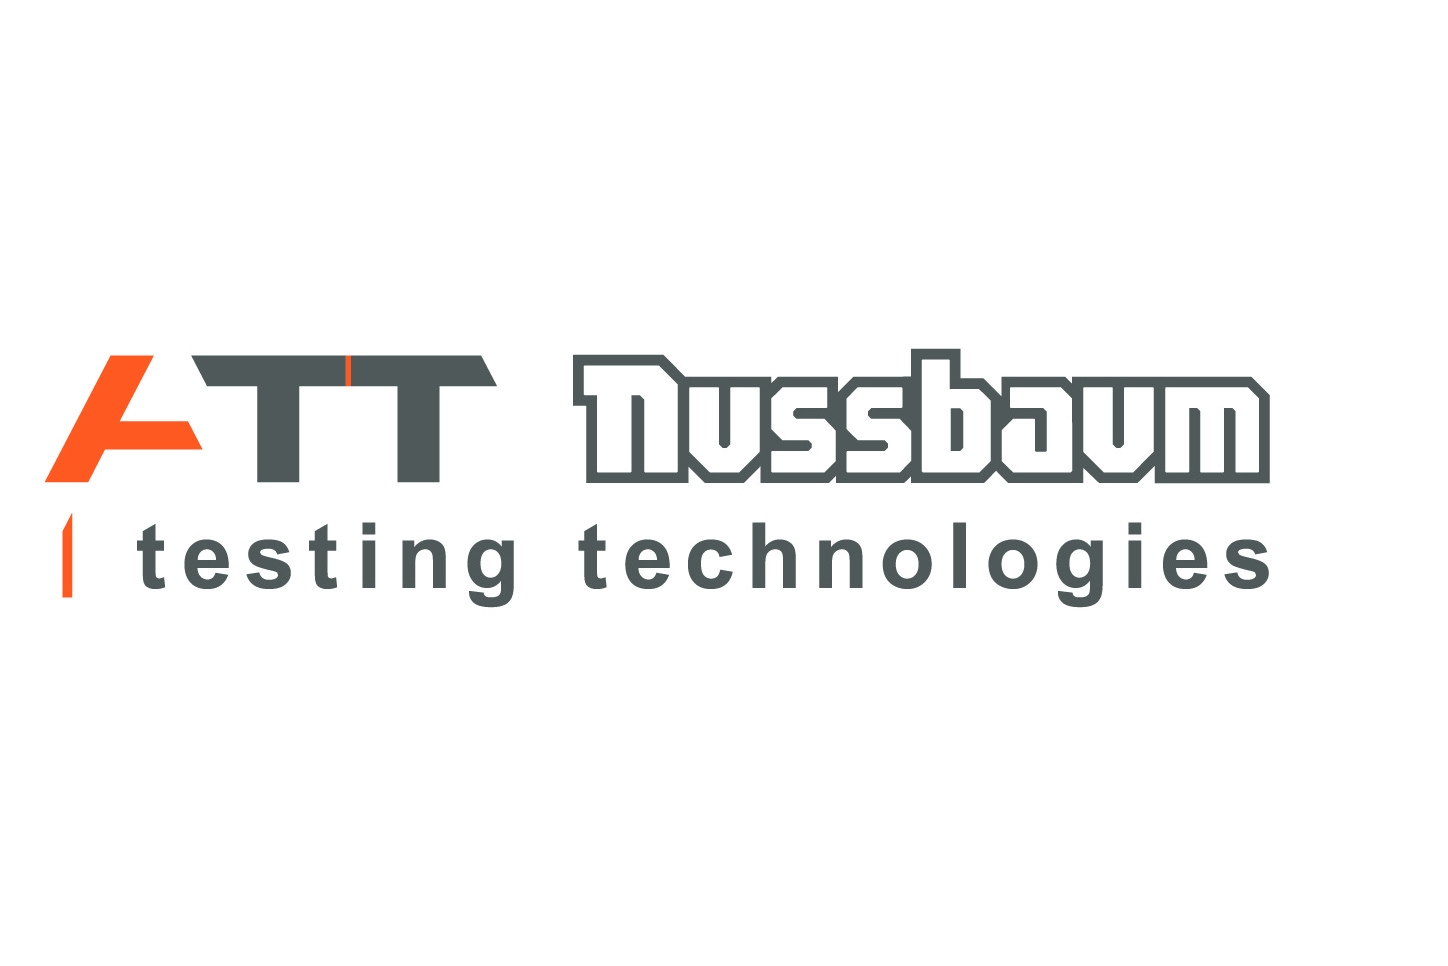 ATT_Nussbaum_Testing Technologies_02